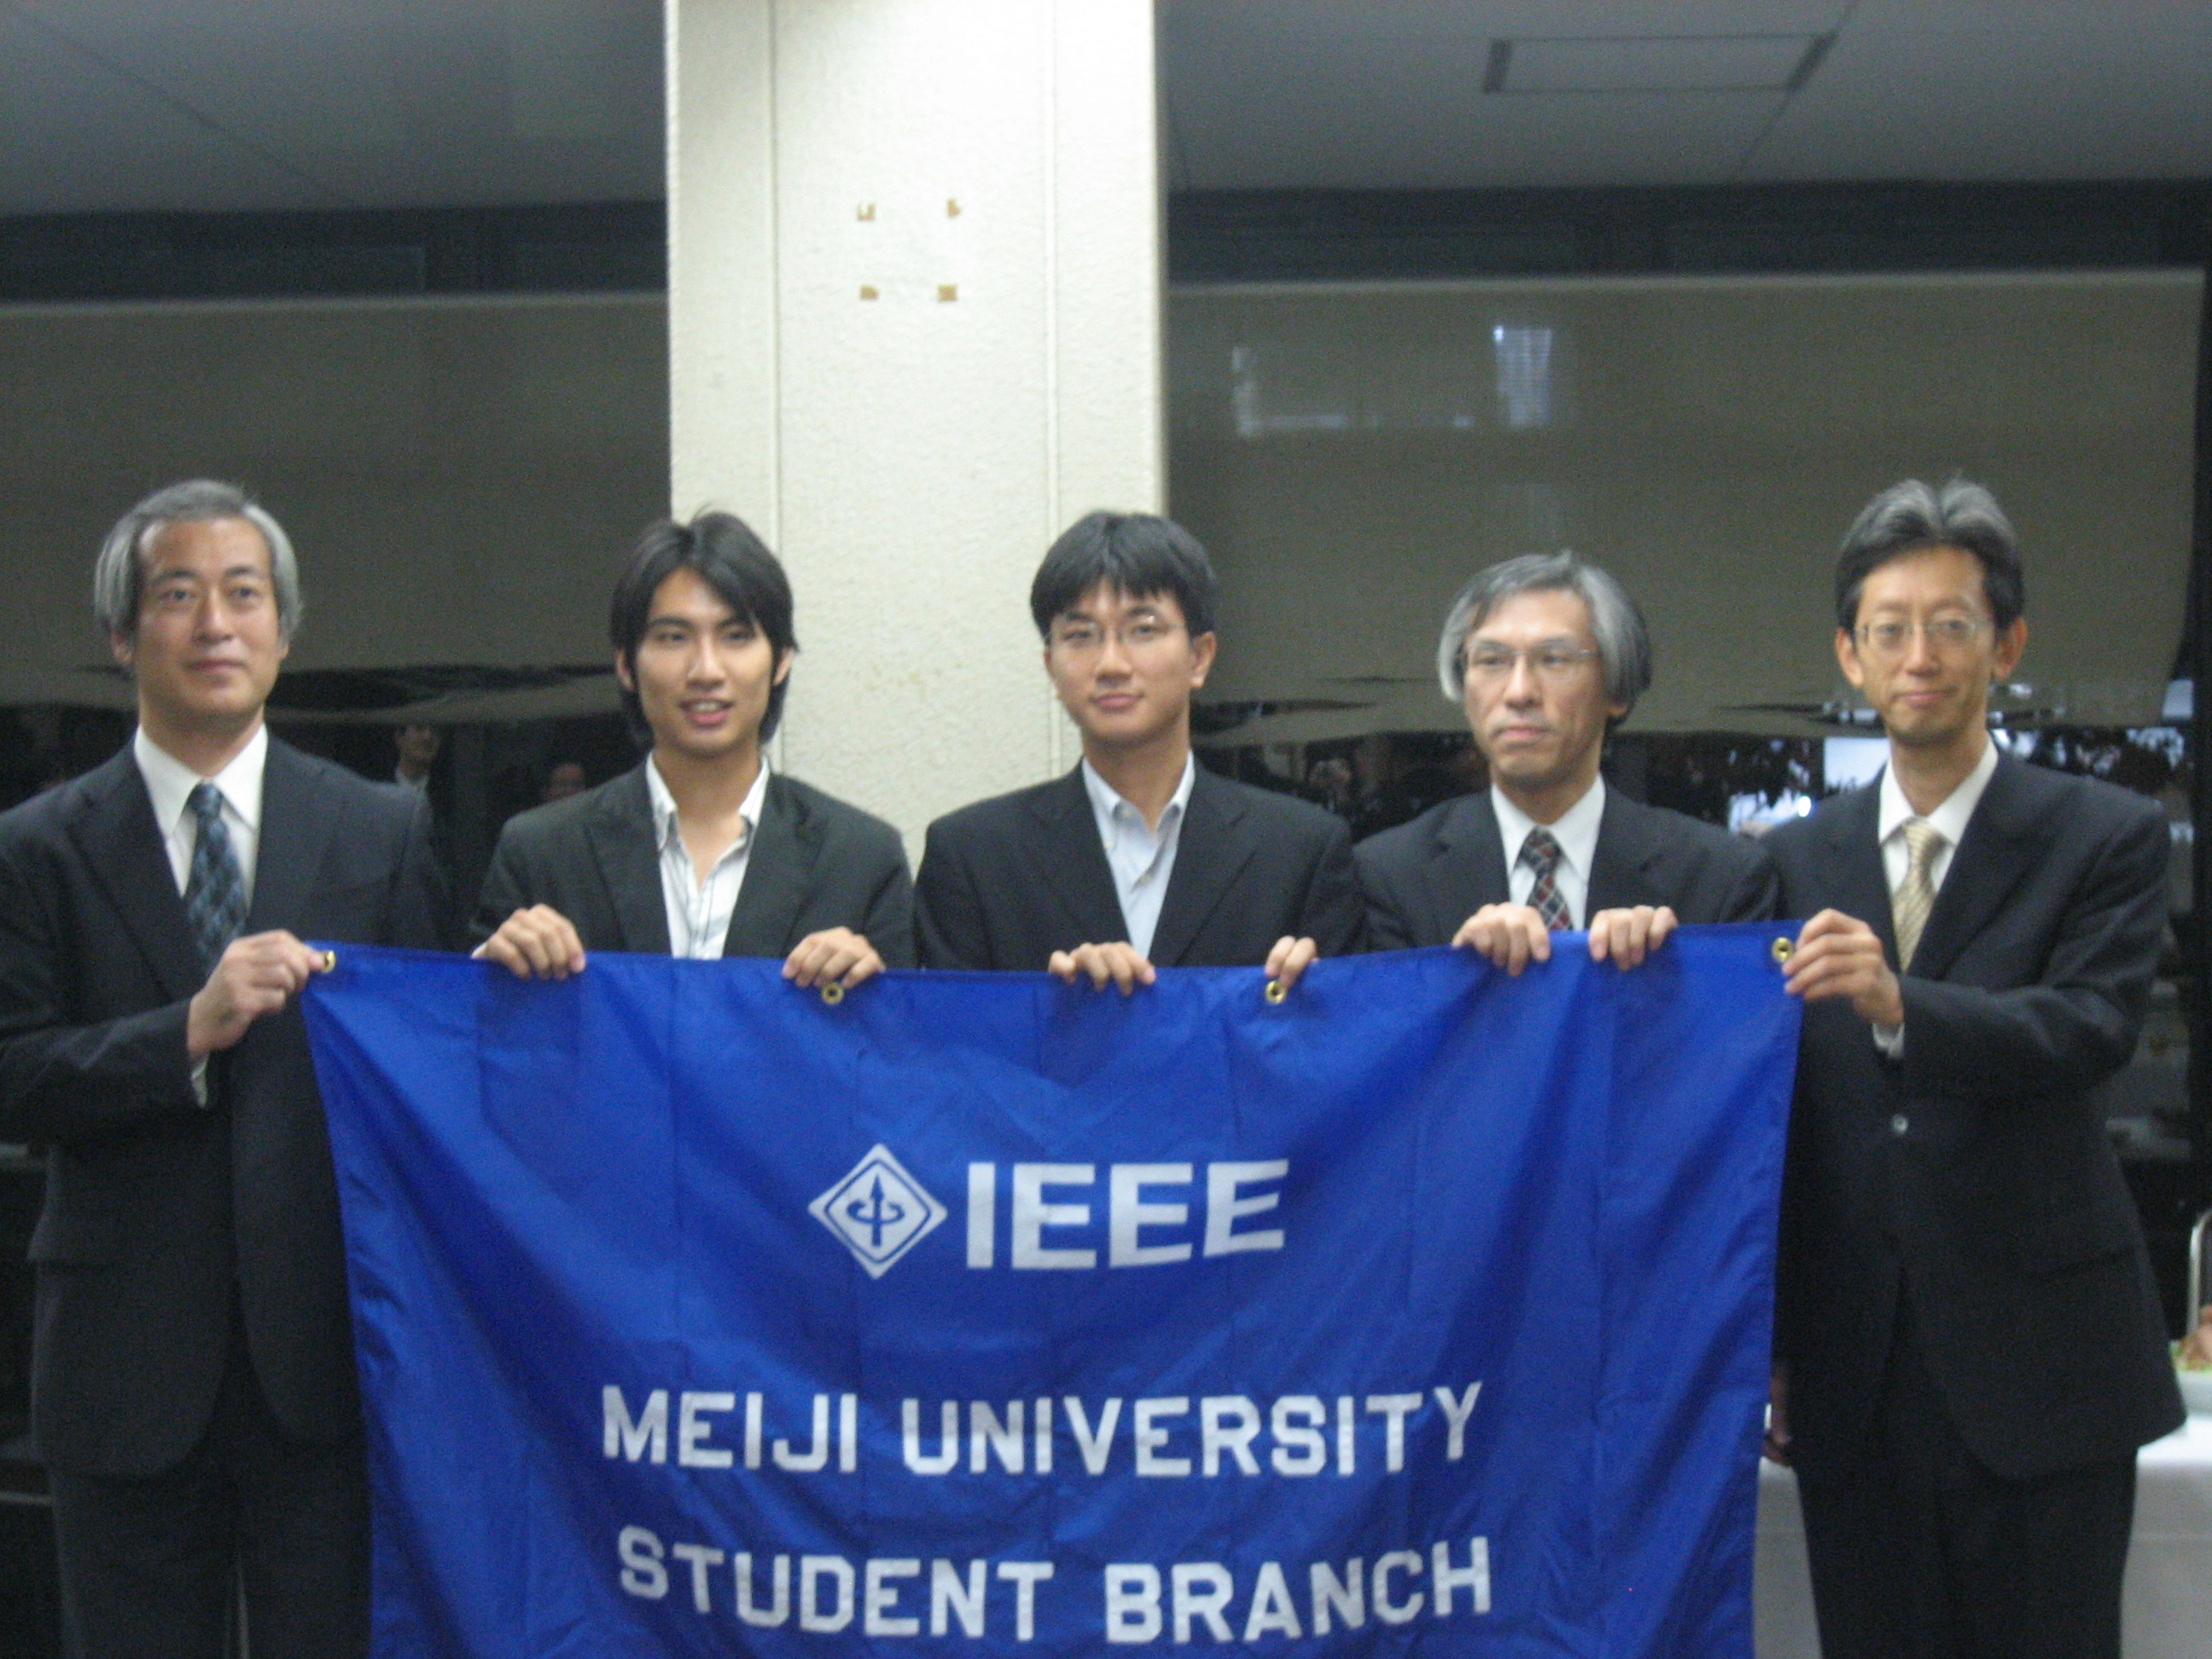 New Branch, Meiji University